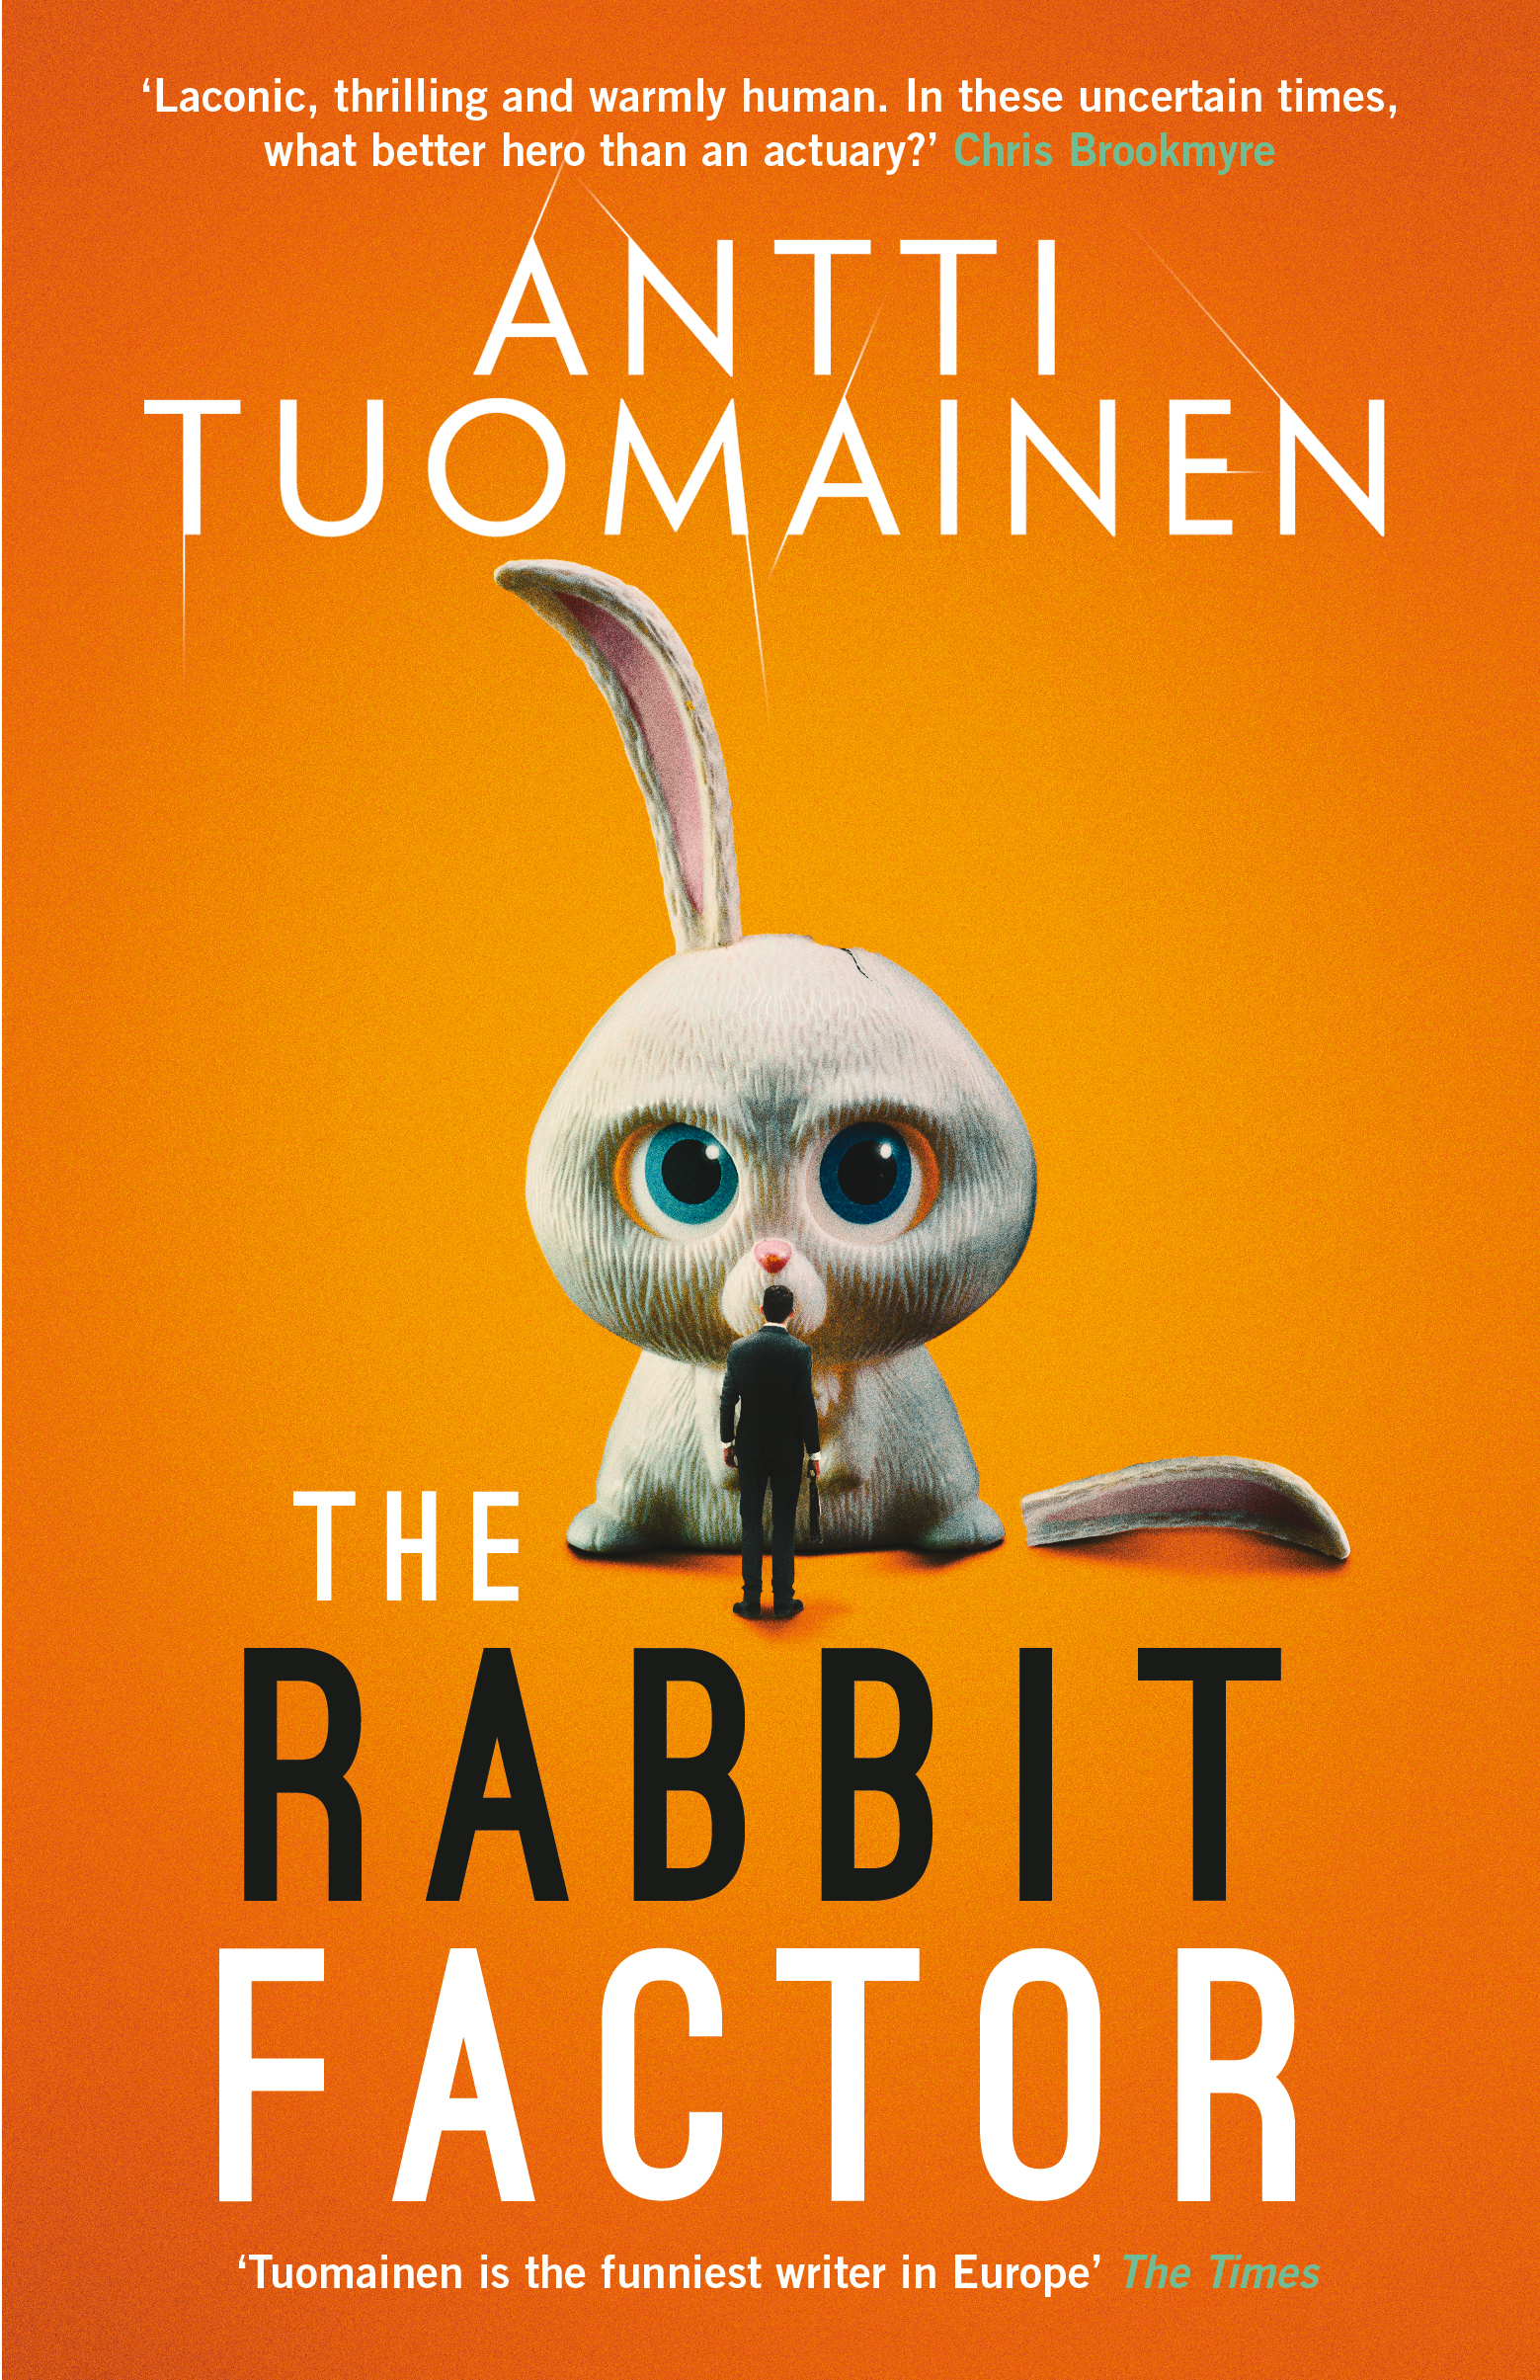 Antti Tuomainen's Rabbit Factor book cover